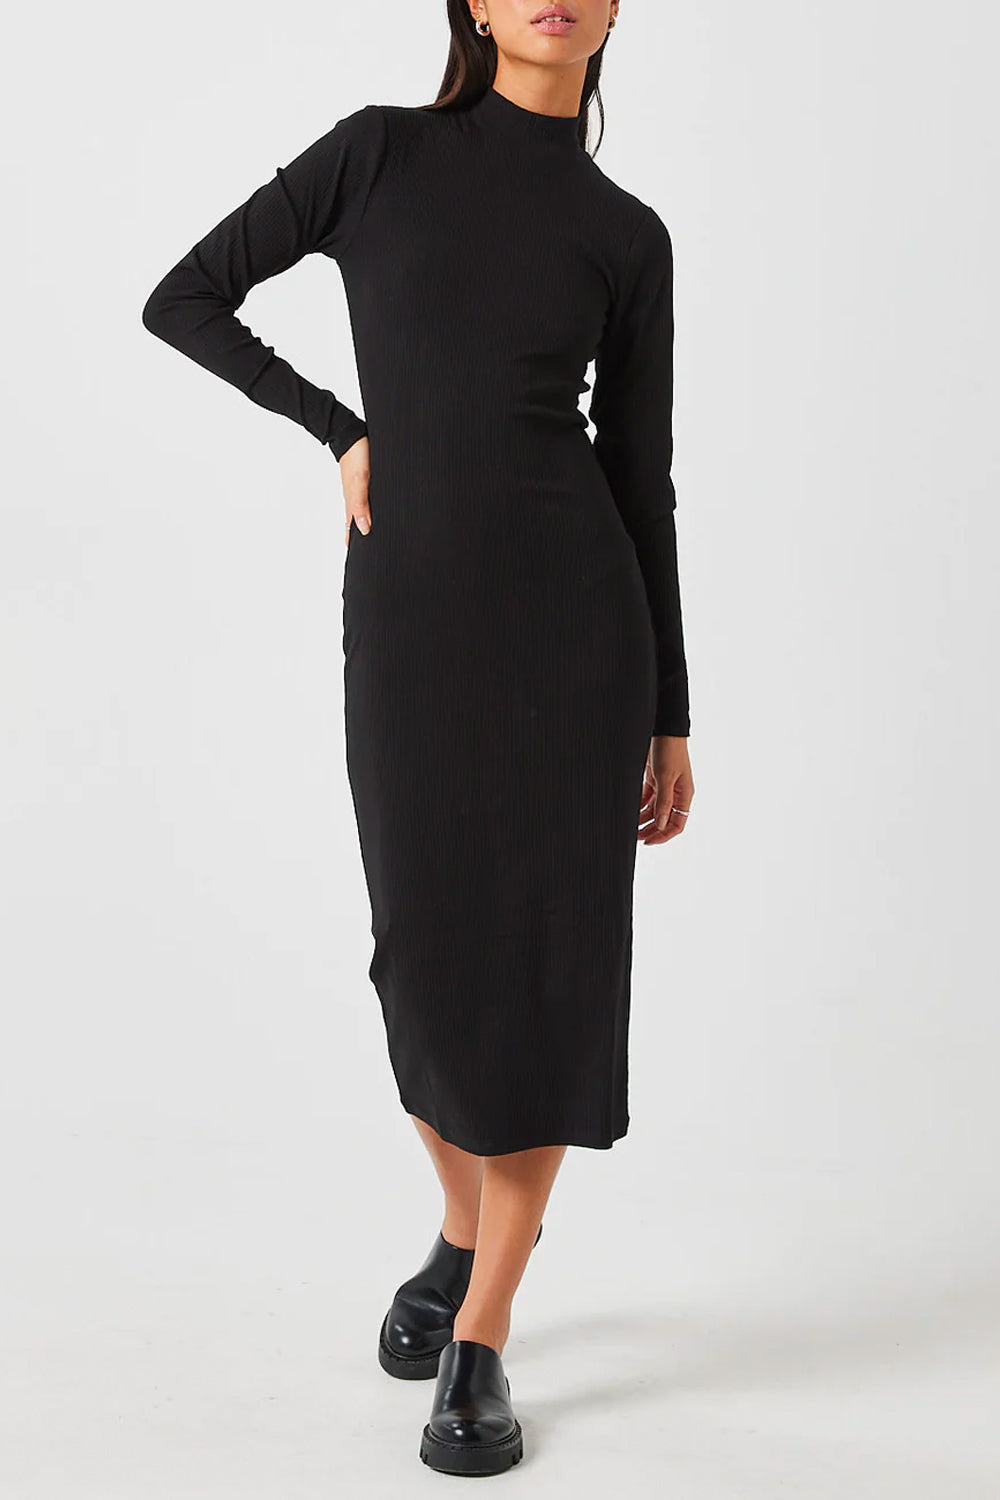 Women's Minimum Clothing Ressy Dress in Black